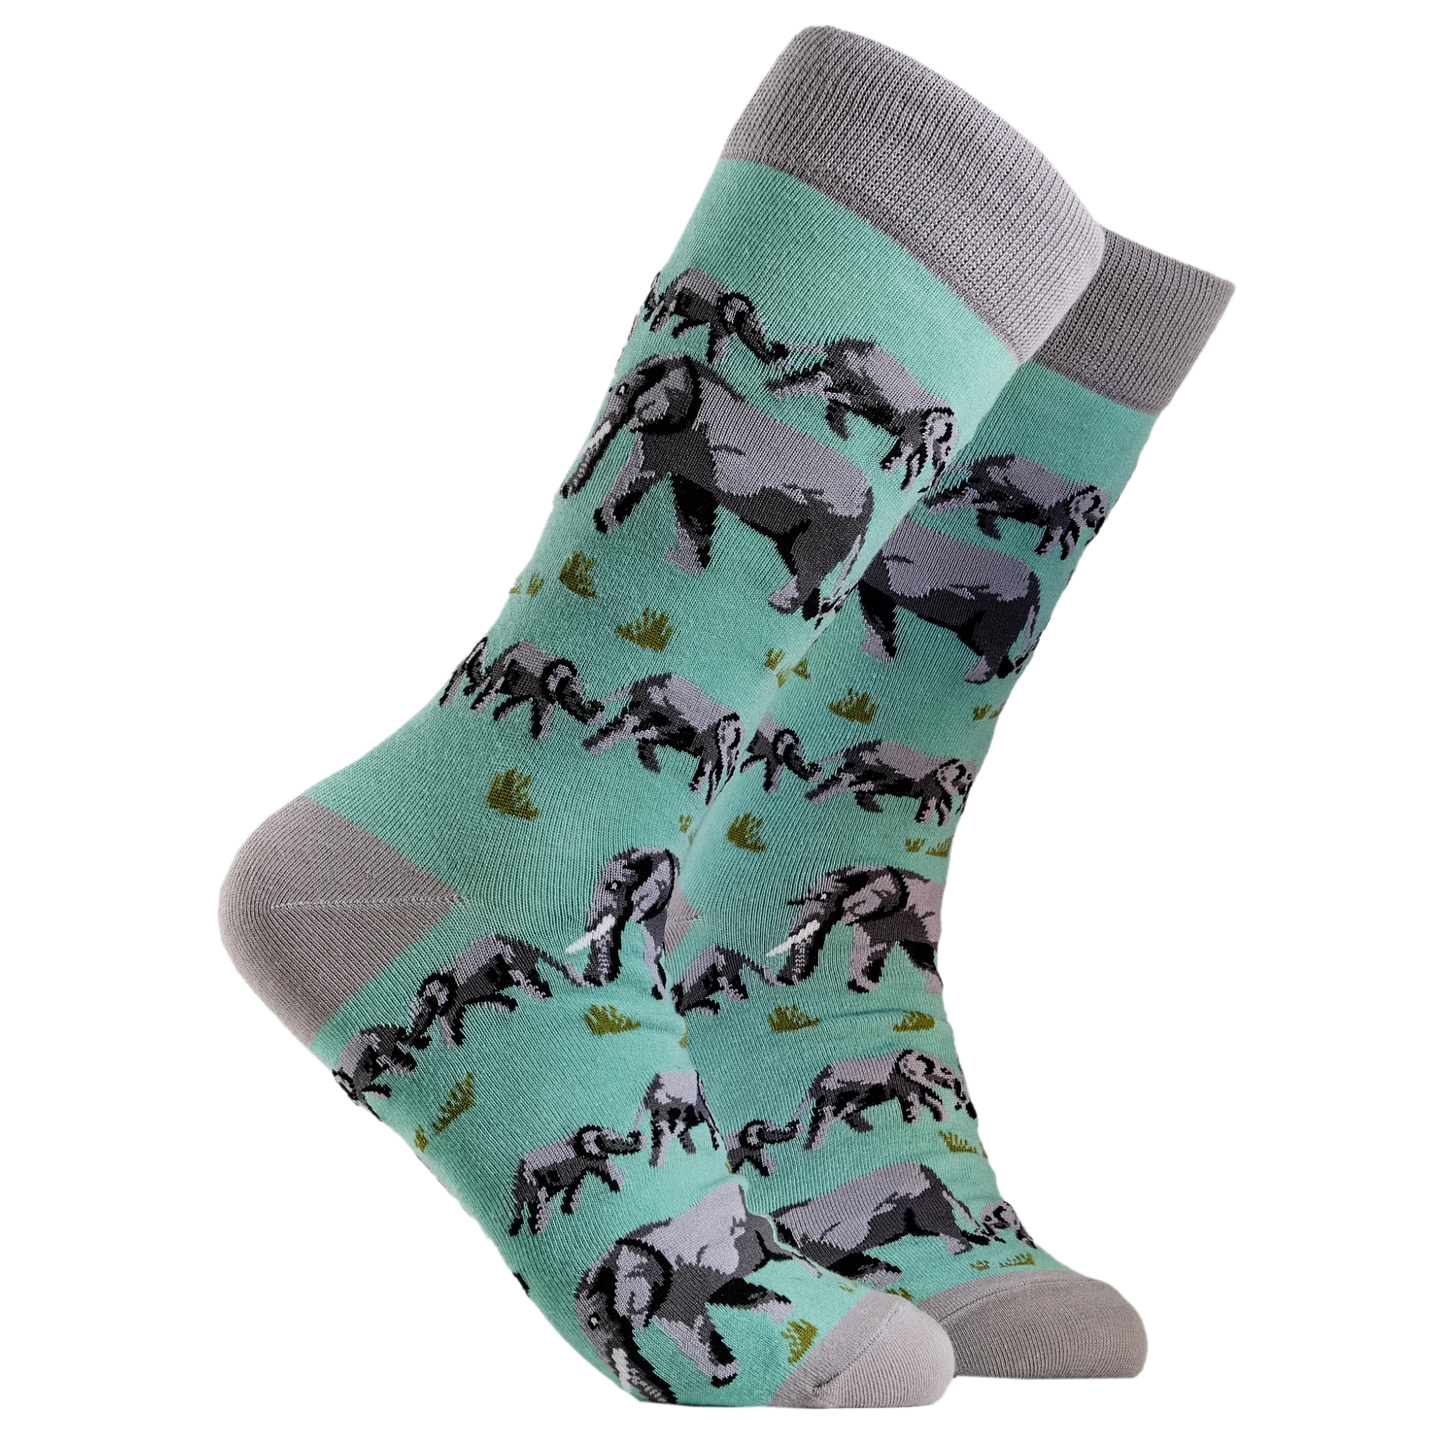 Elephants Socks. A pair of socks depicting elephants. Turquoise legs, grey cuff, heel and toe.